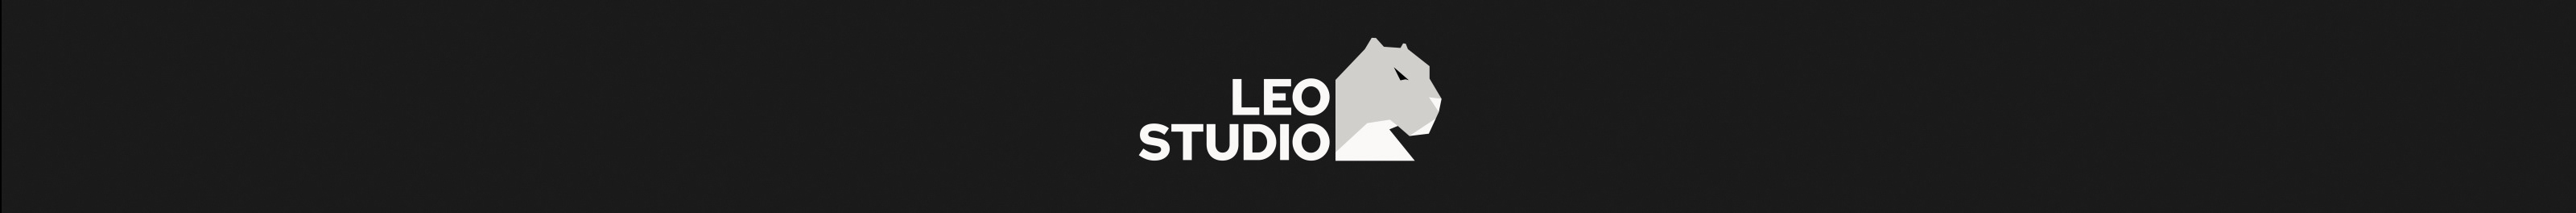 LEO STUDIO's profile banner